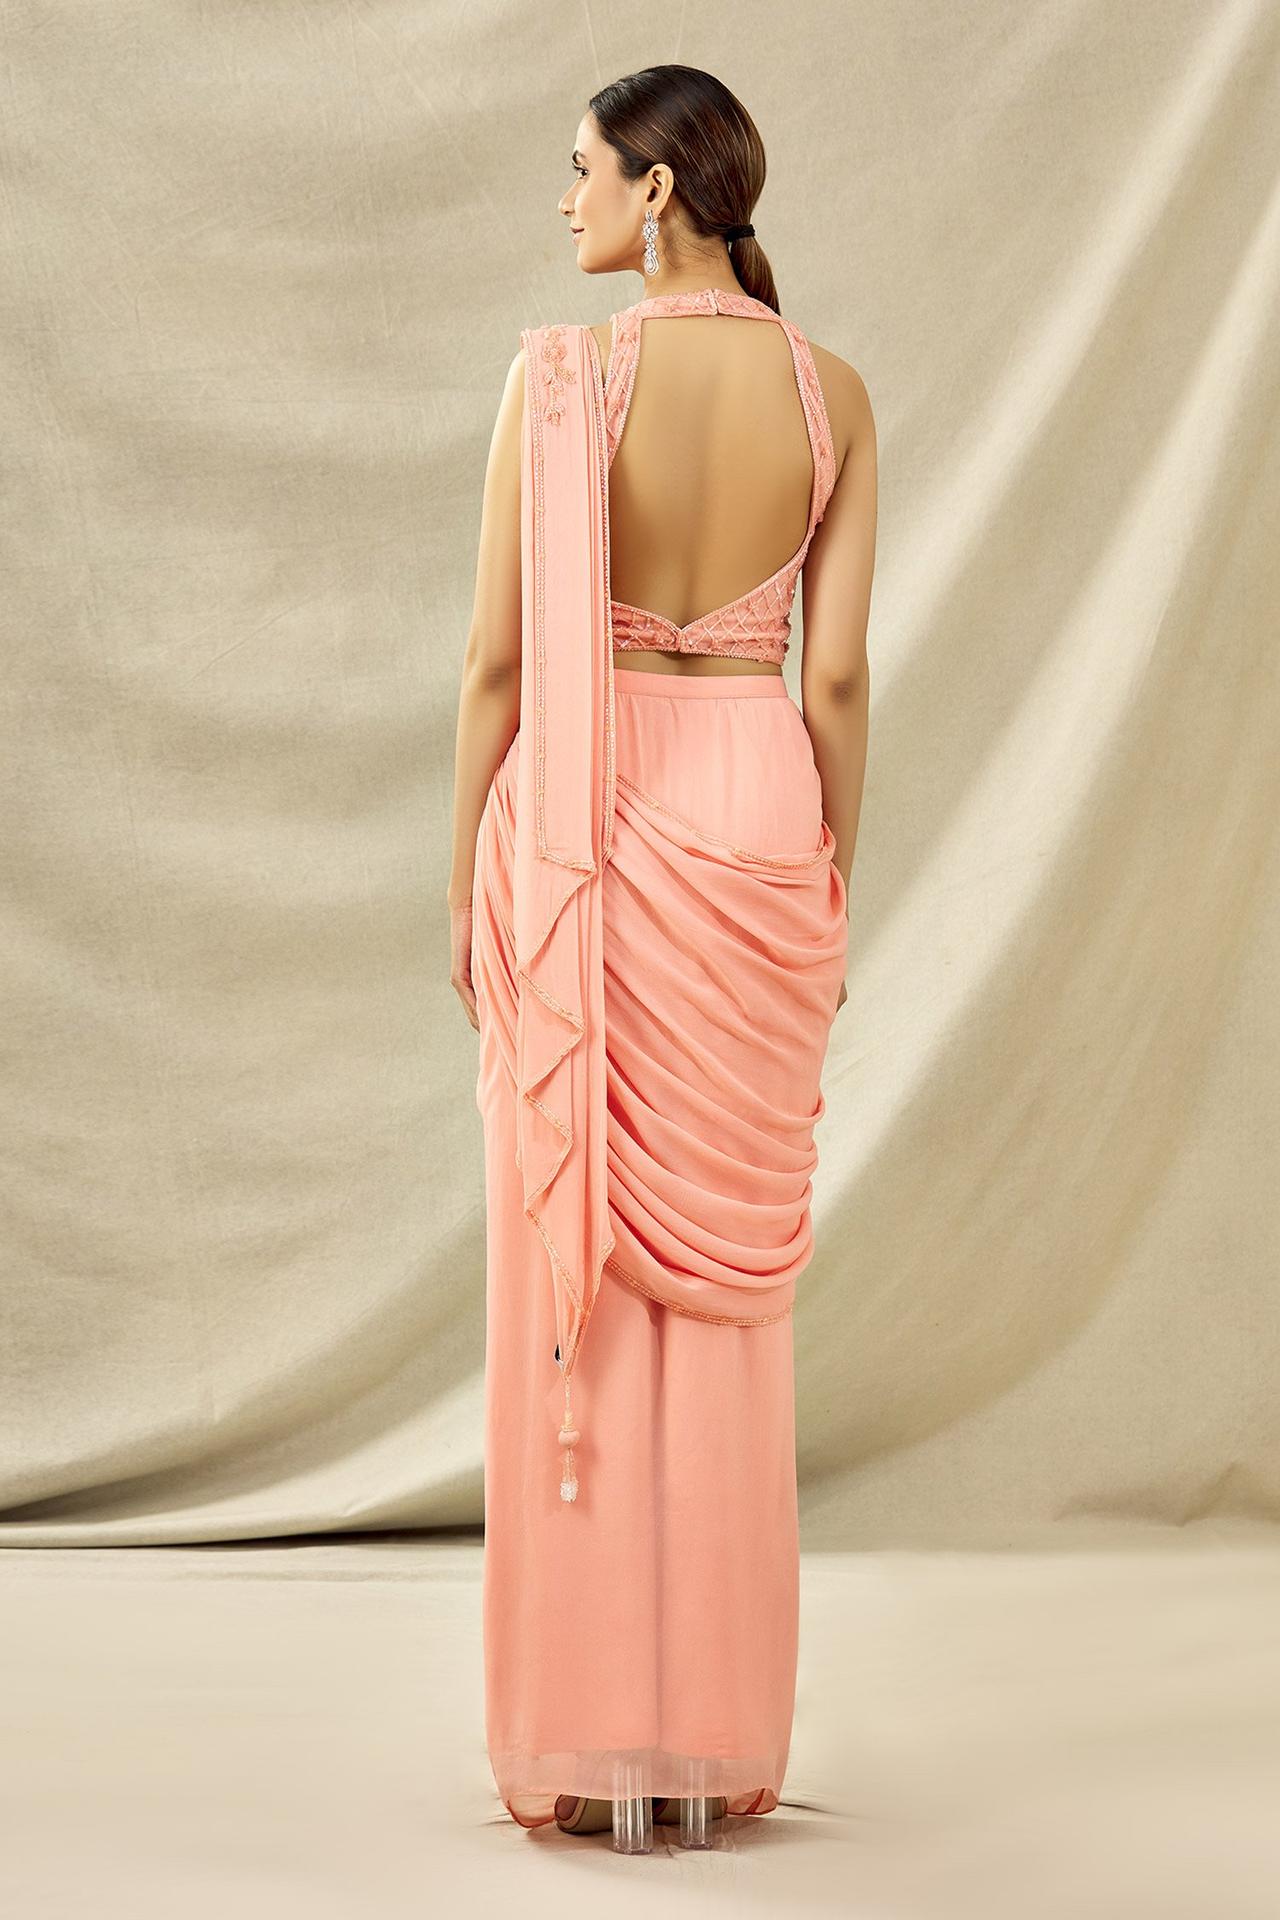 25 Trending Designs of Silk Dresses for Stunning Look